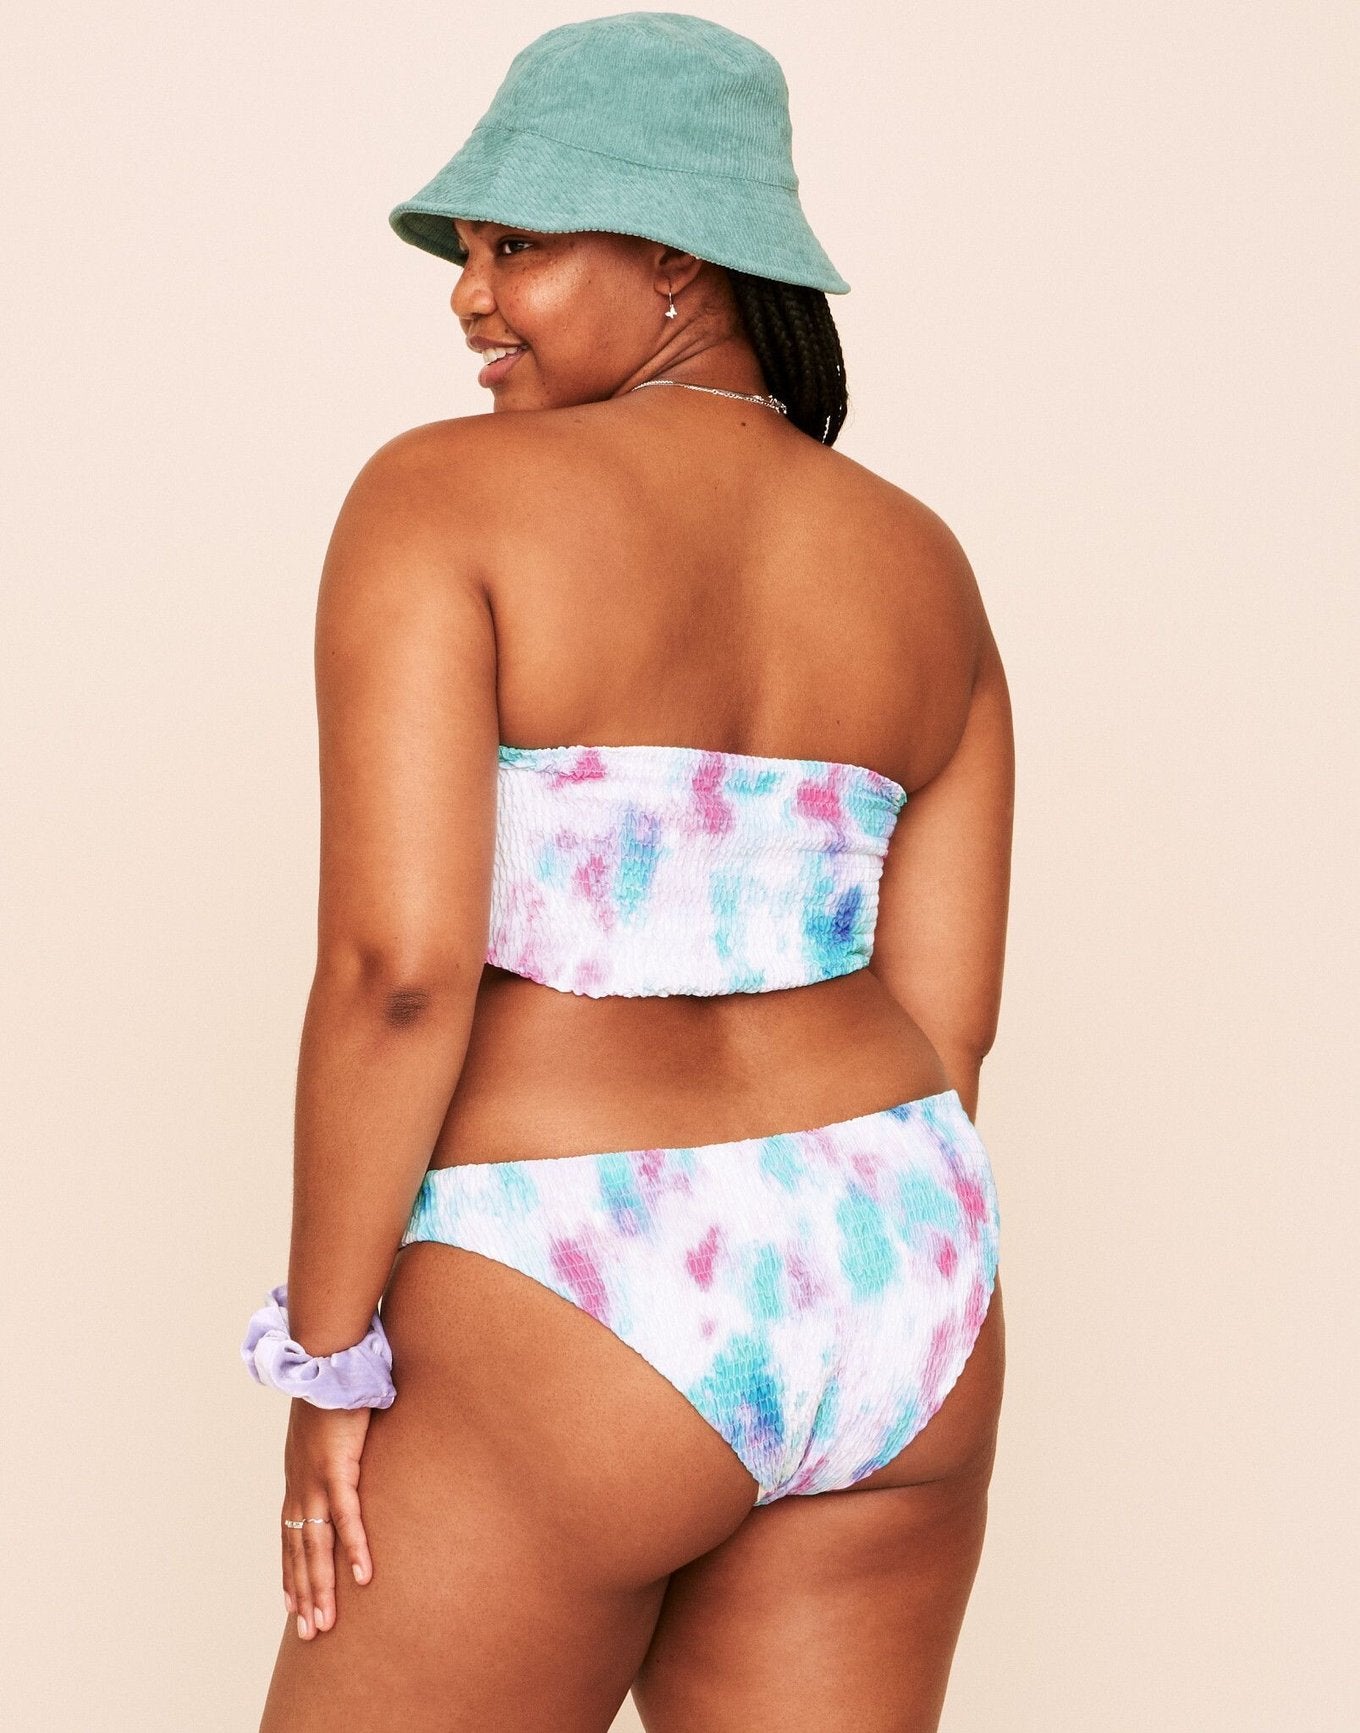 Earth Republic Arlette Smocking Bandeau Top Swim Top in color PR171261 and shape bikini